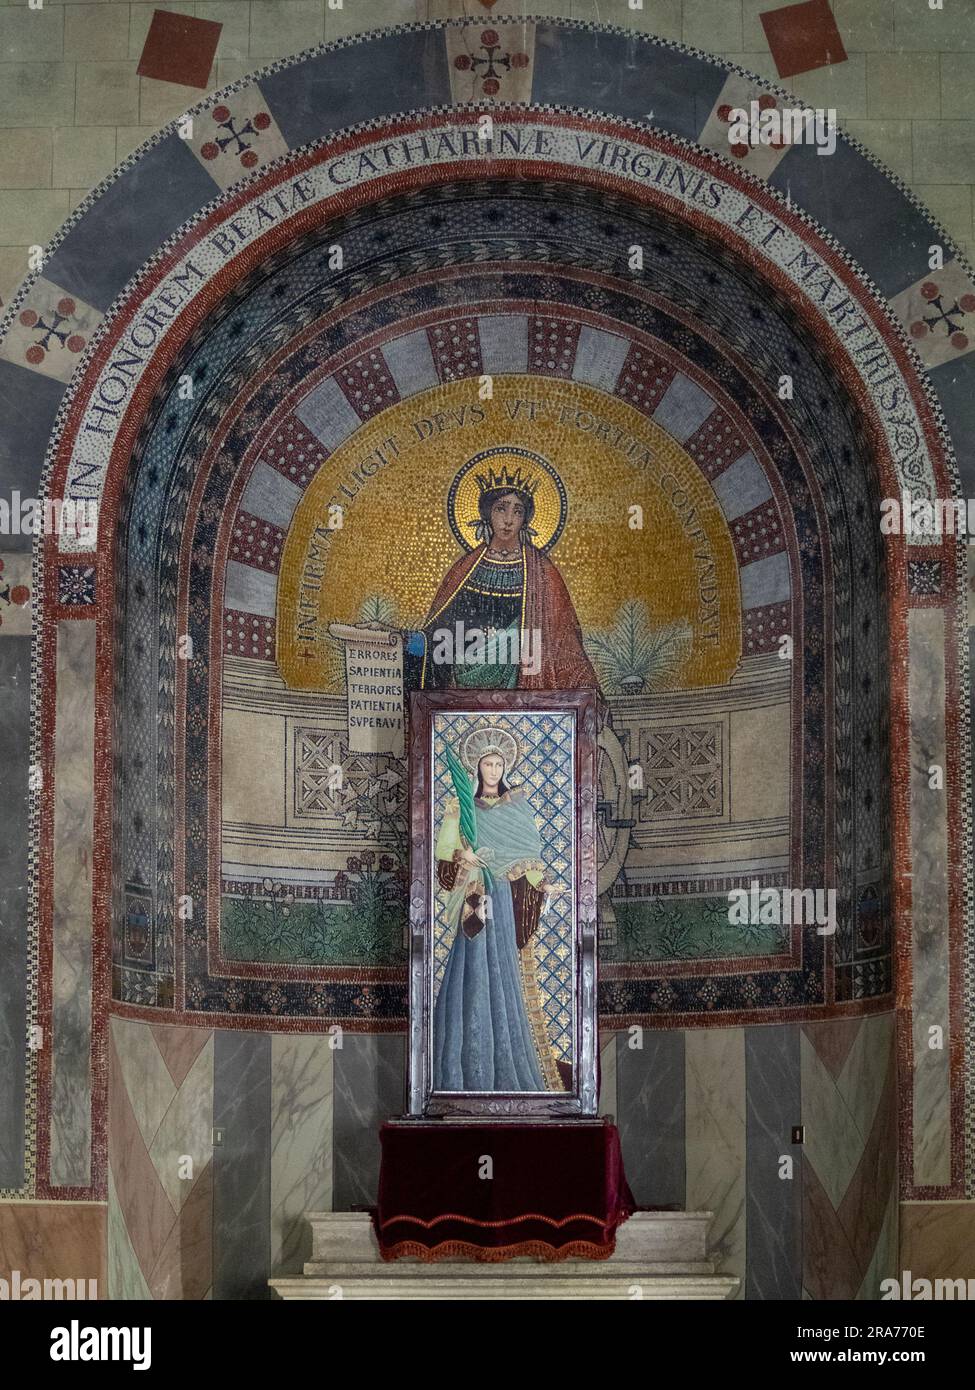 Gefälschte Mosaikbemalte Altarapse von Arturo Viligiardi, Chiusi Kathedrale Stockfoto